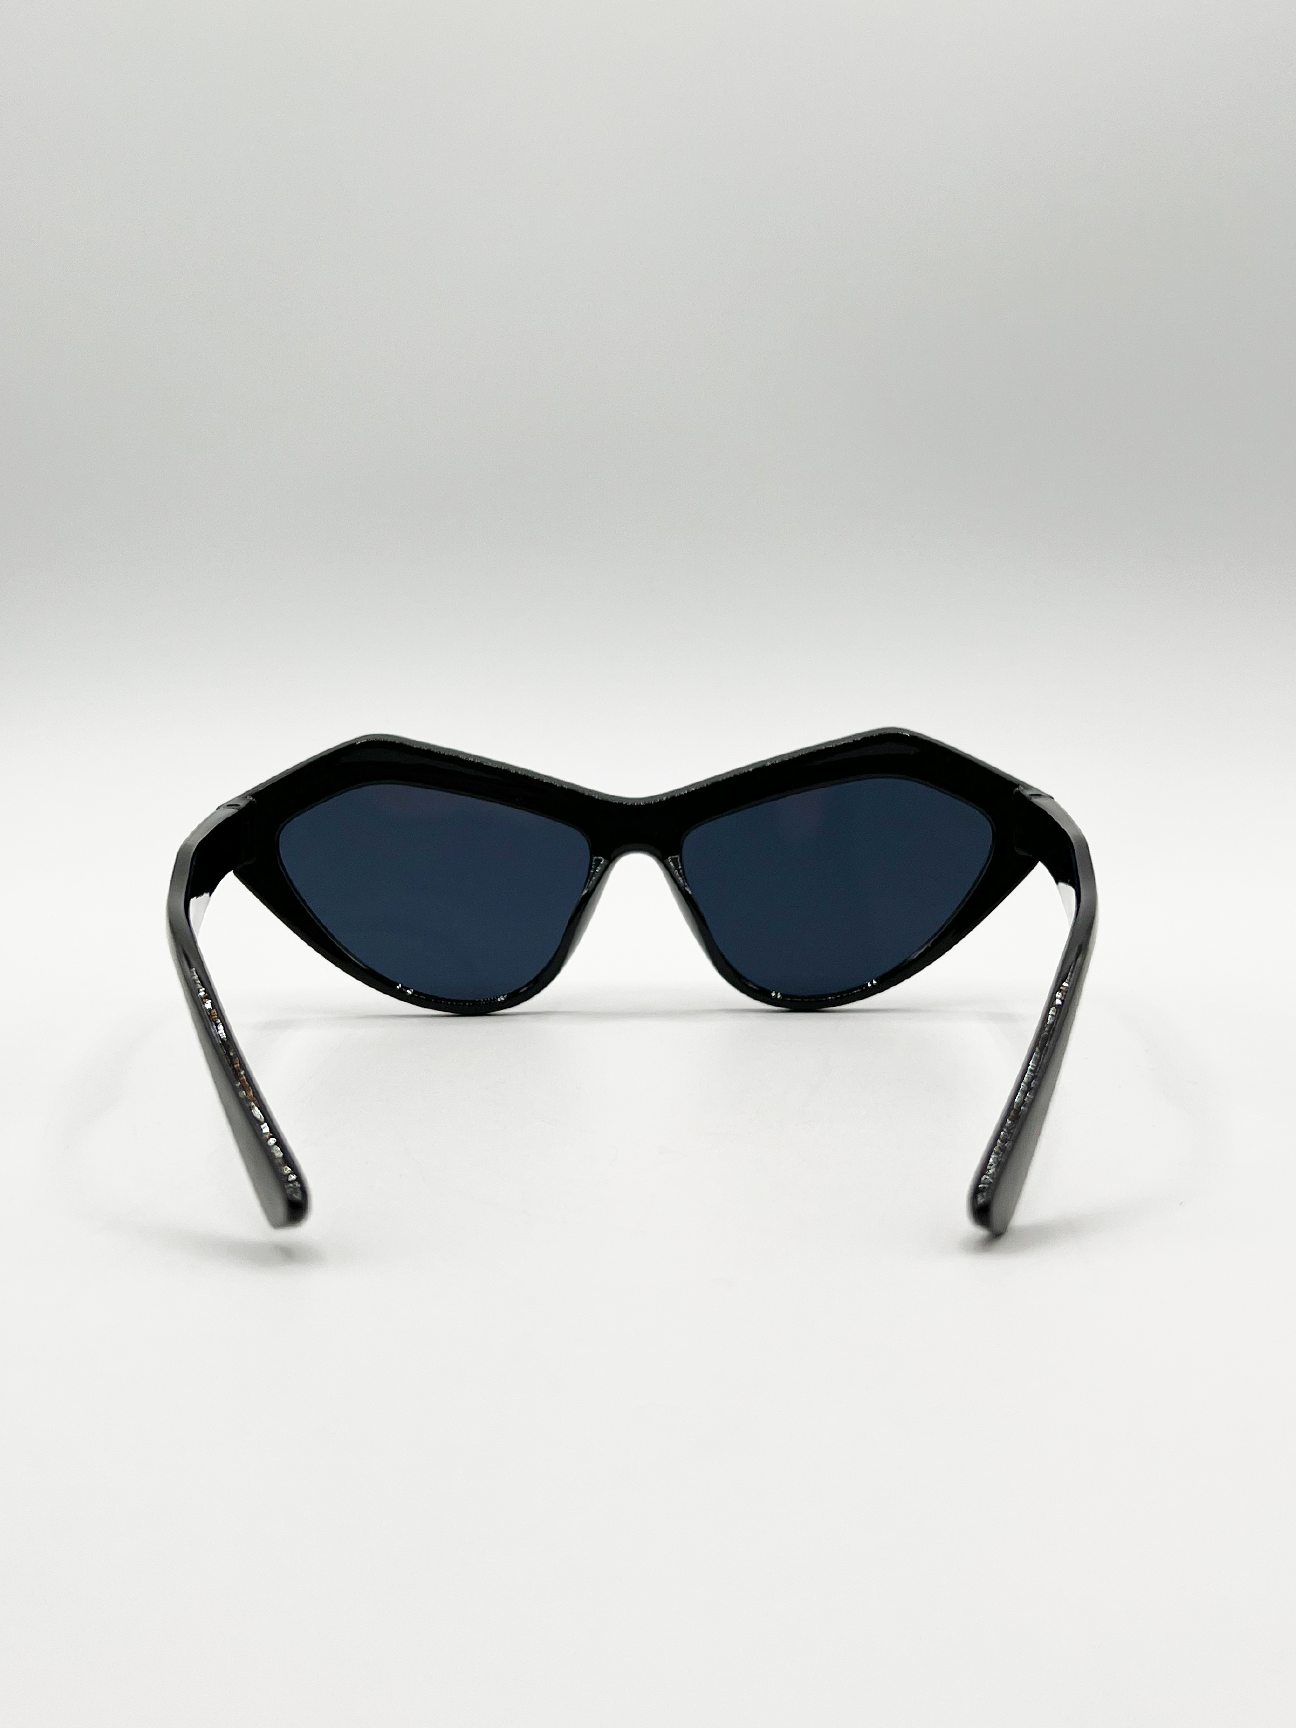 Vintage Style Angular Sunglasses in Black